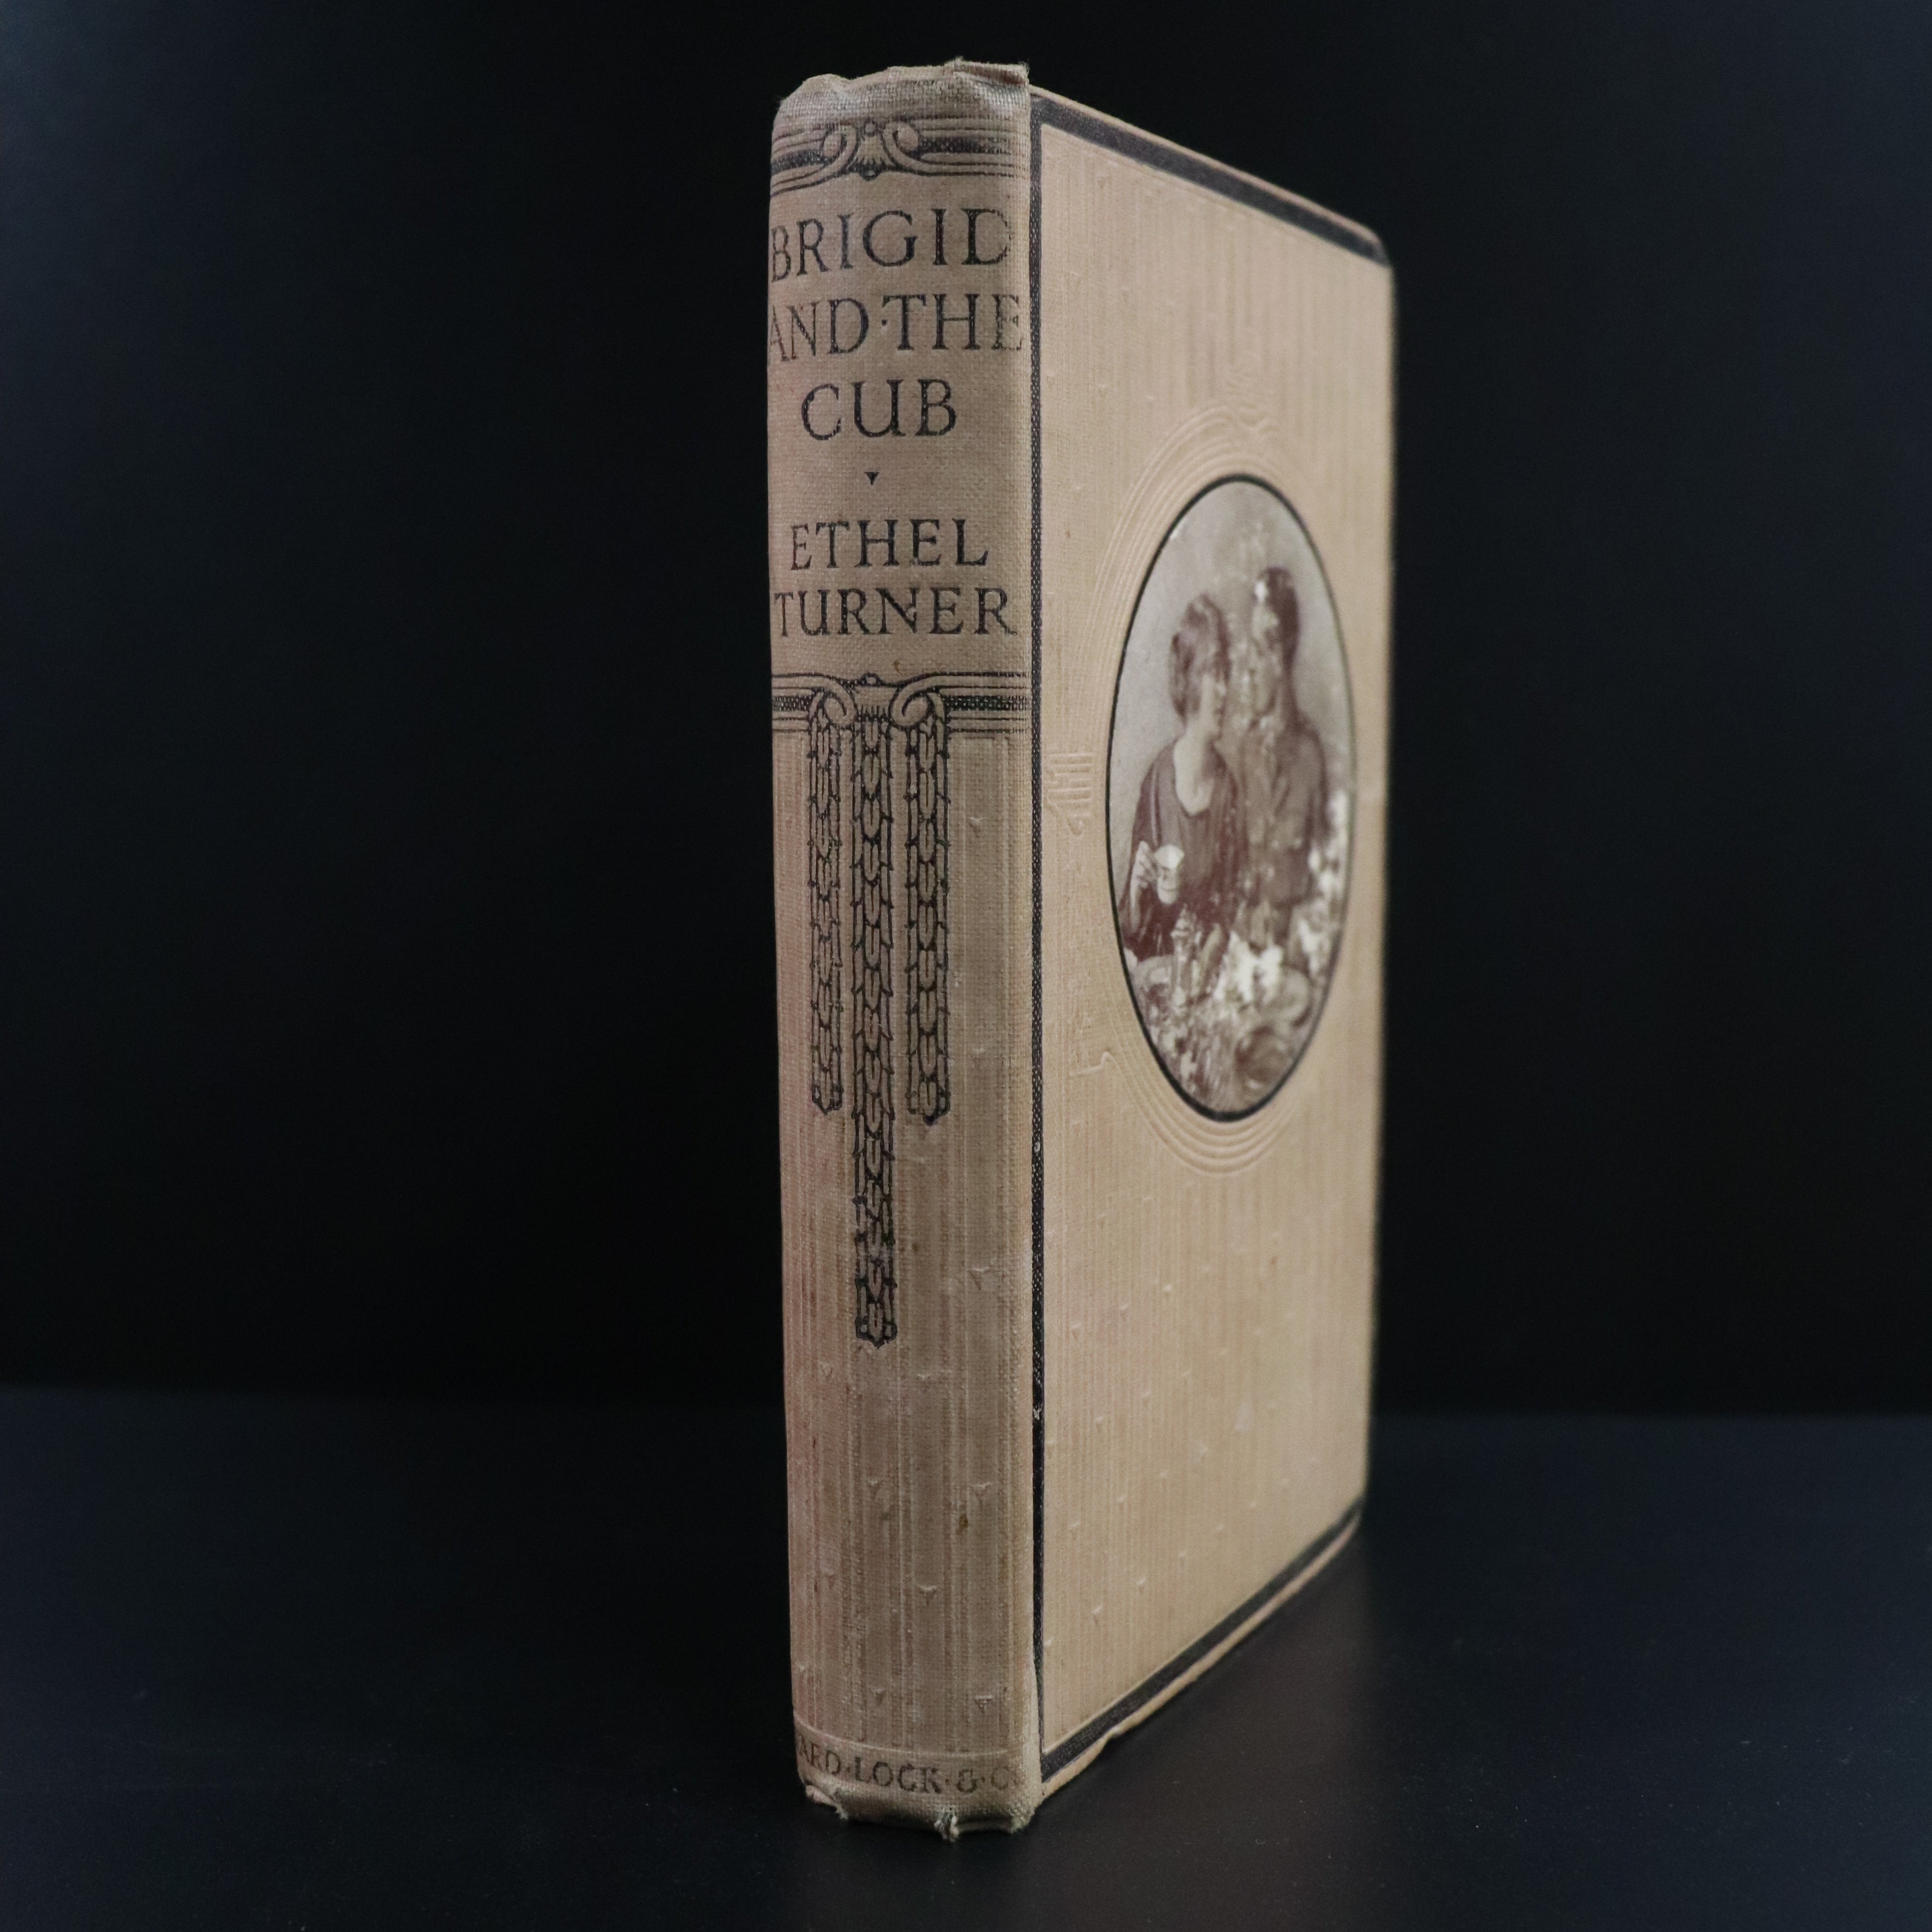 1919 Brigid And The Cub by Ethel Turner 1st Edition Australian Fiction Book